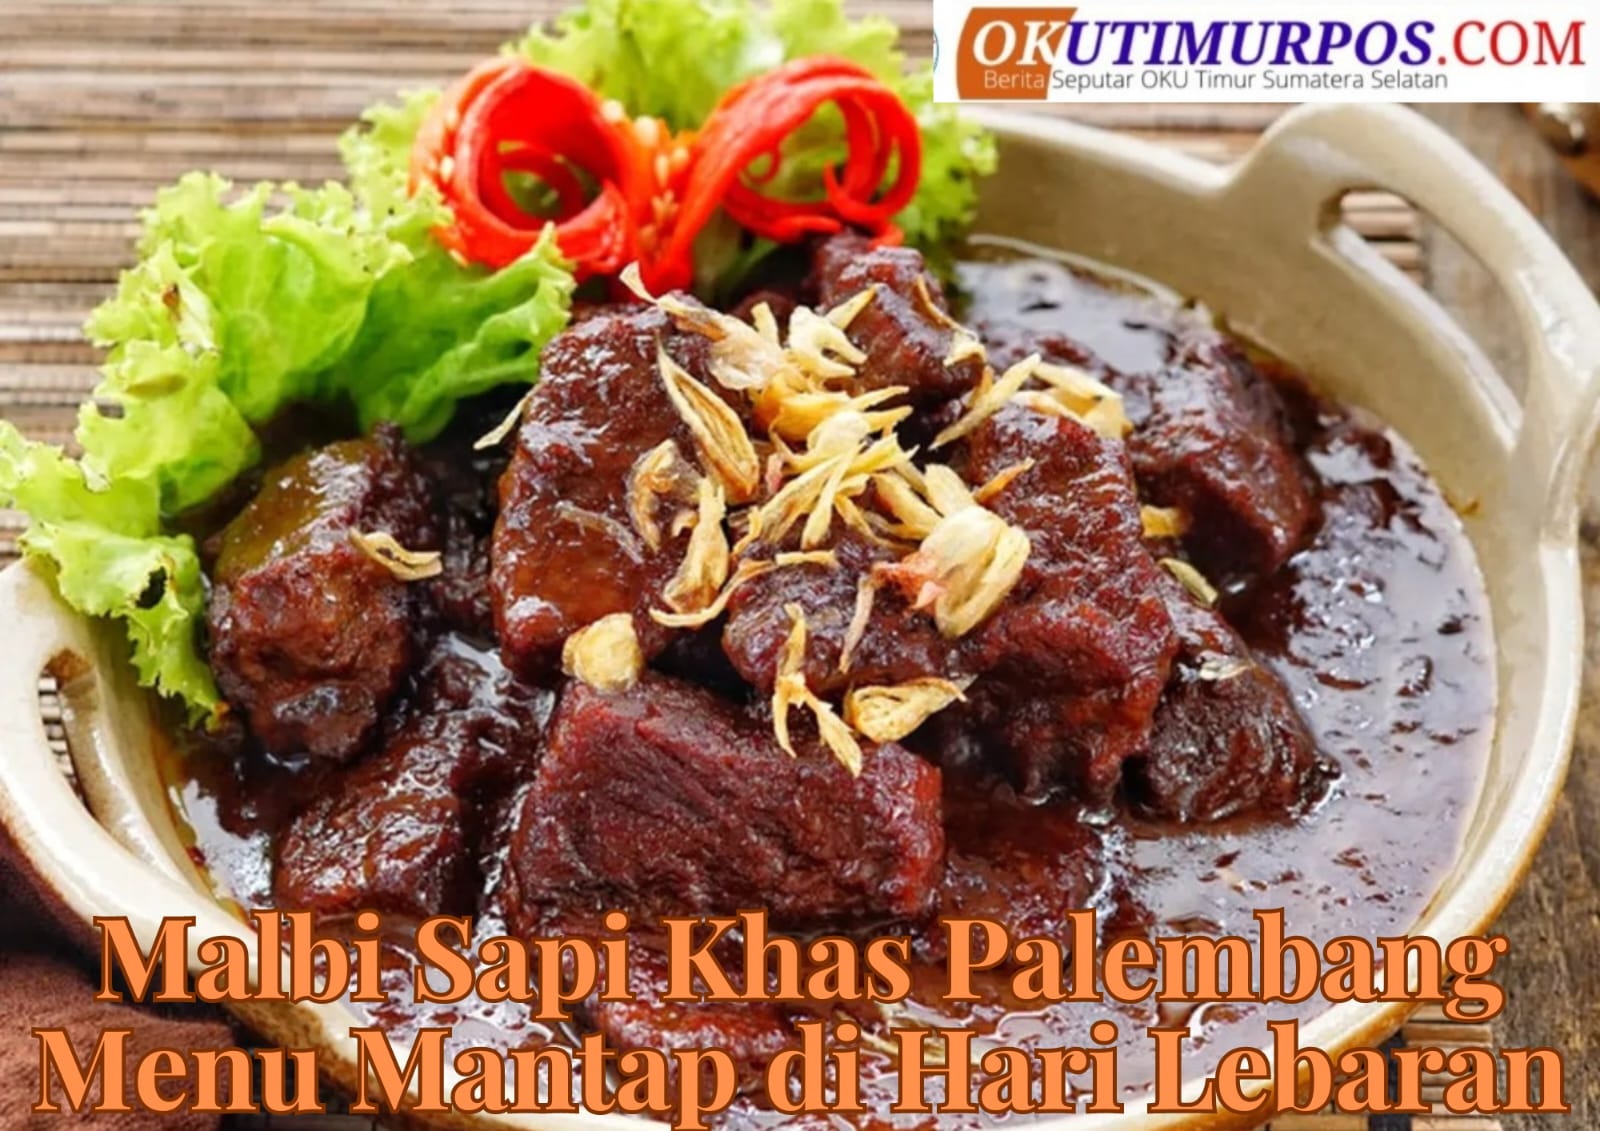 Begini Resep Malbi Daging Makanan Khas Palembang di Hari Lebaran, Dijamin Lezat dan Gurih